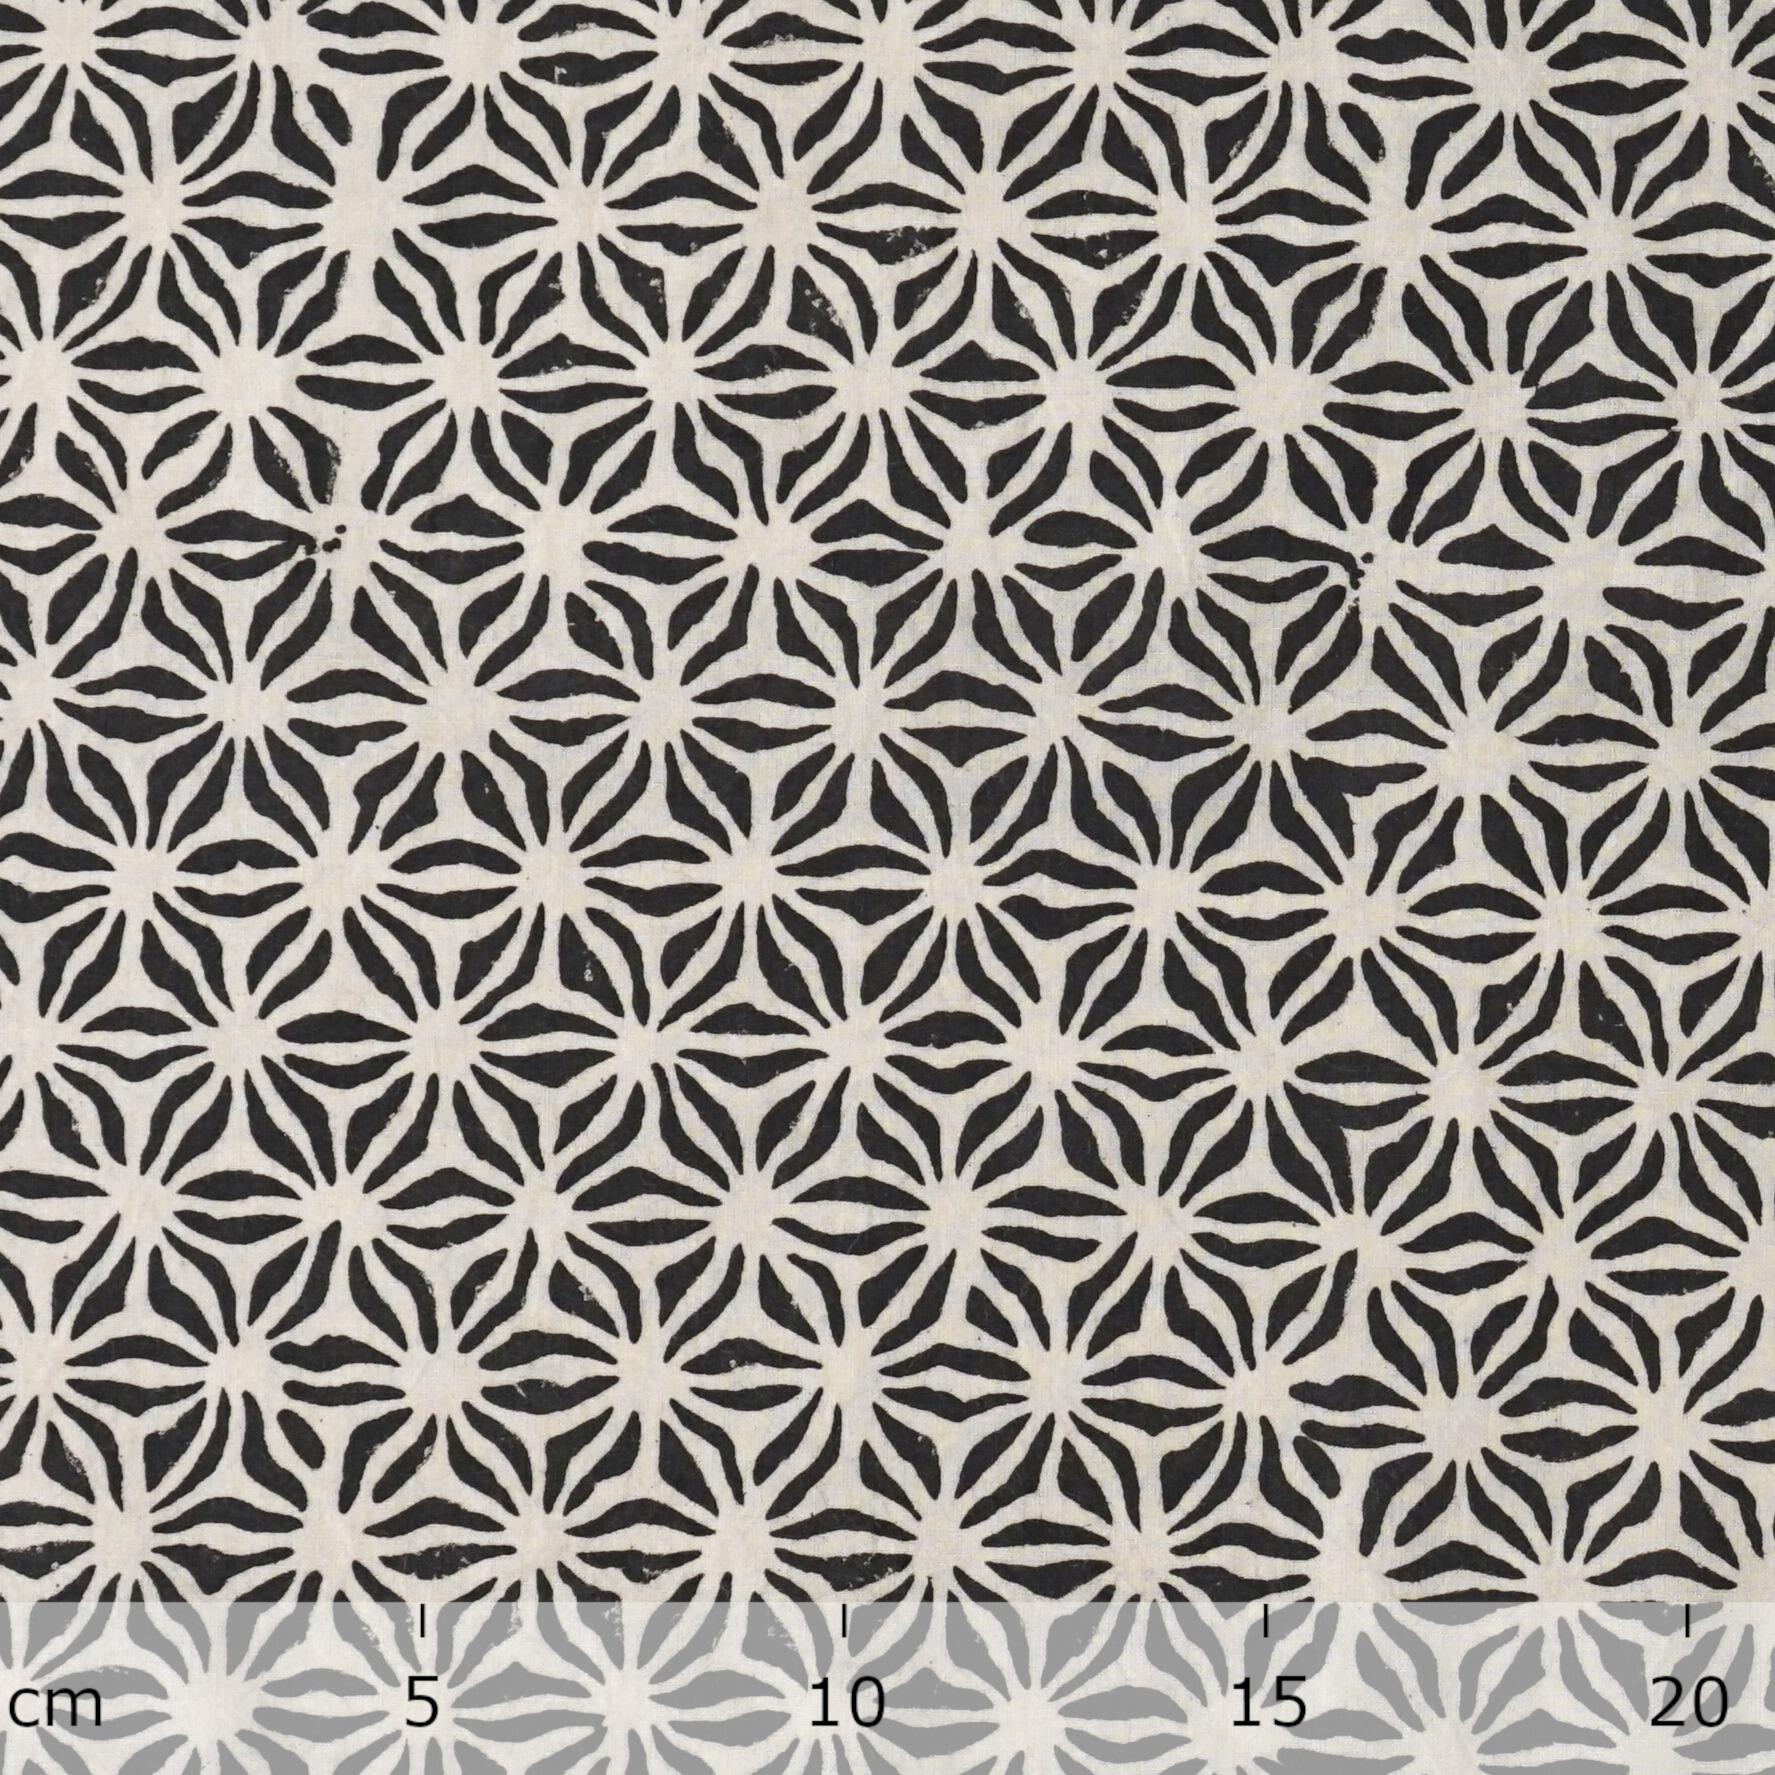 SIK20 - Block-Printed Cotton Fabric - Starfish Design - Black Iron Dye - Ruler